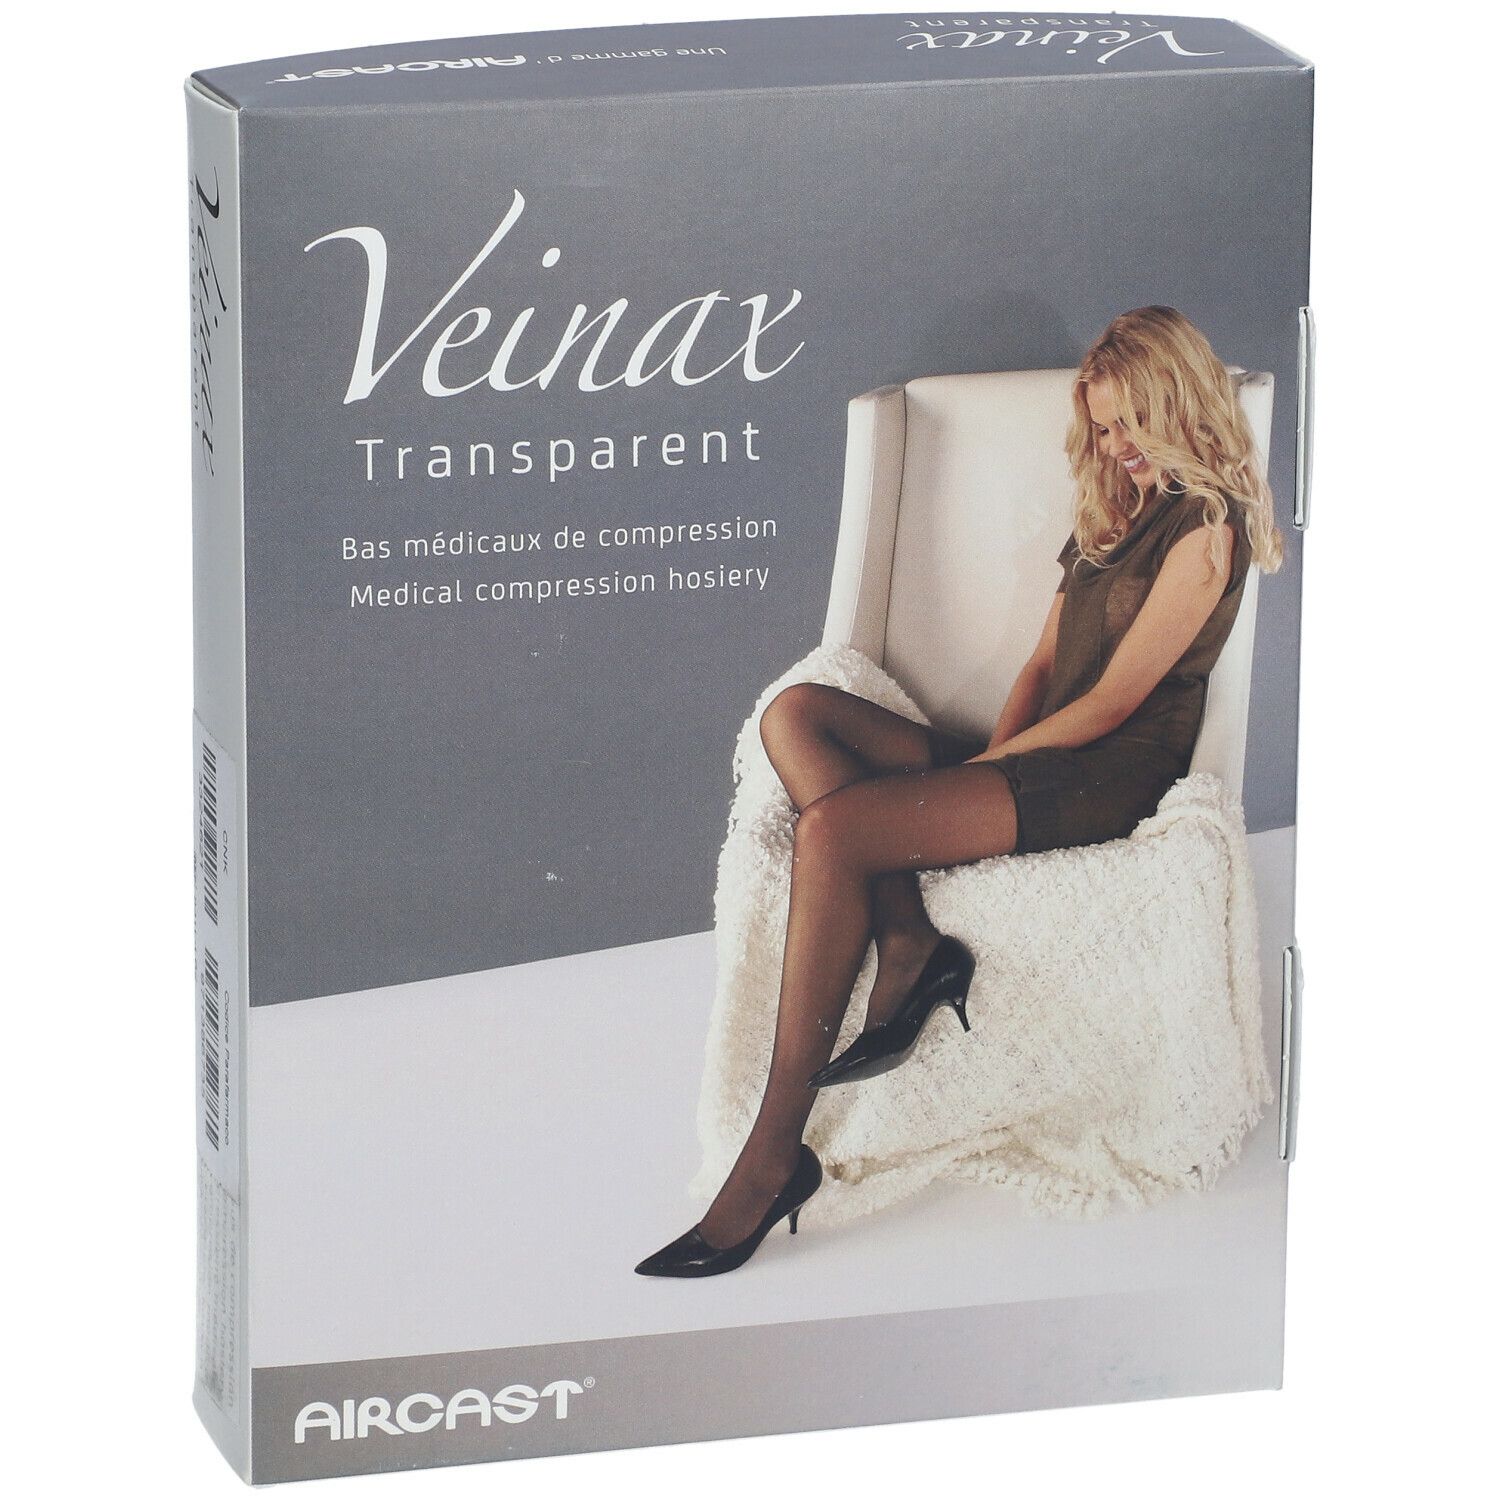 Veinax Transparent Mi-bas genou Beige clair Classe 2 Taille 2